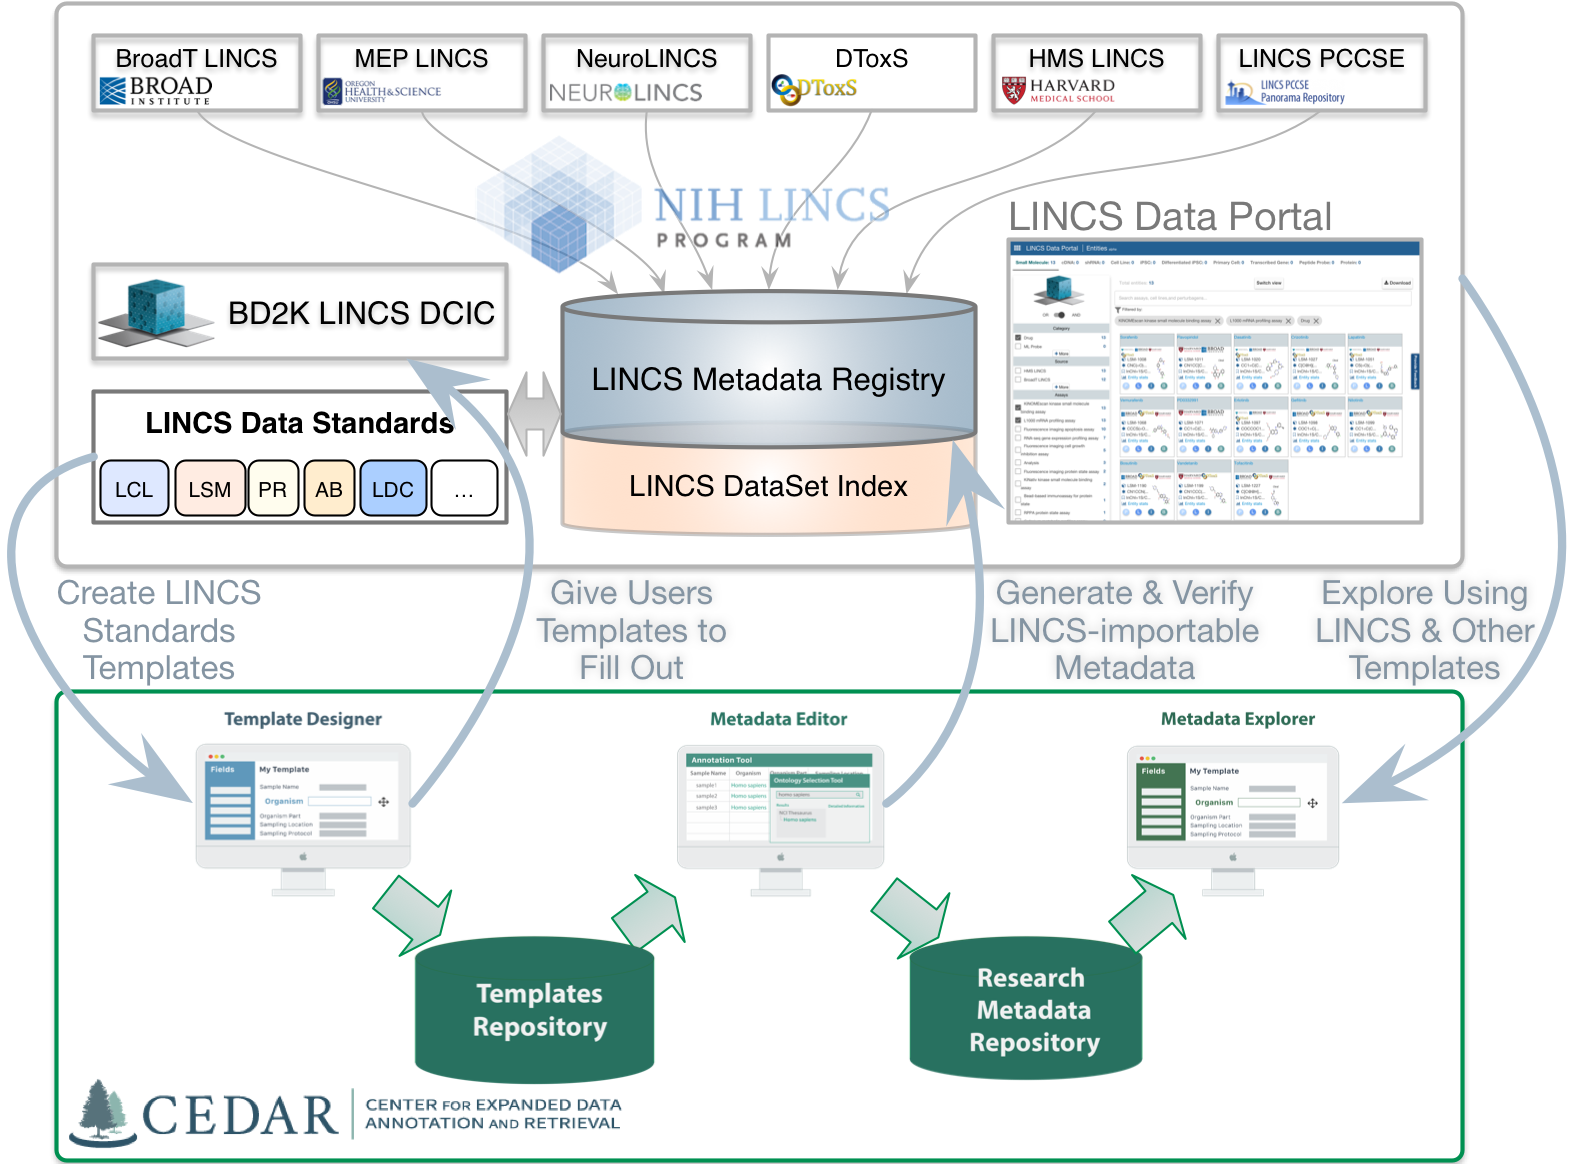 Example interfaces between LINCS and CEDAR